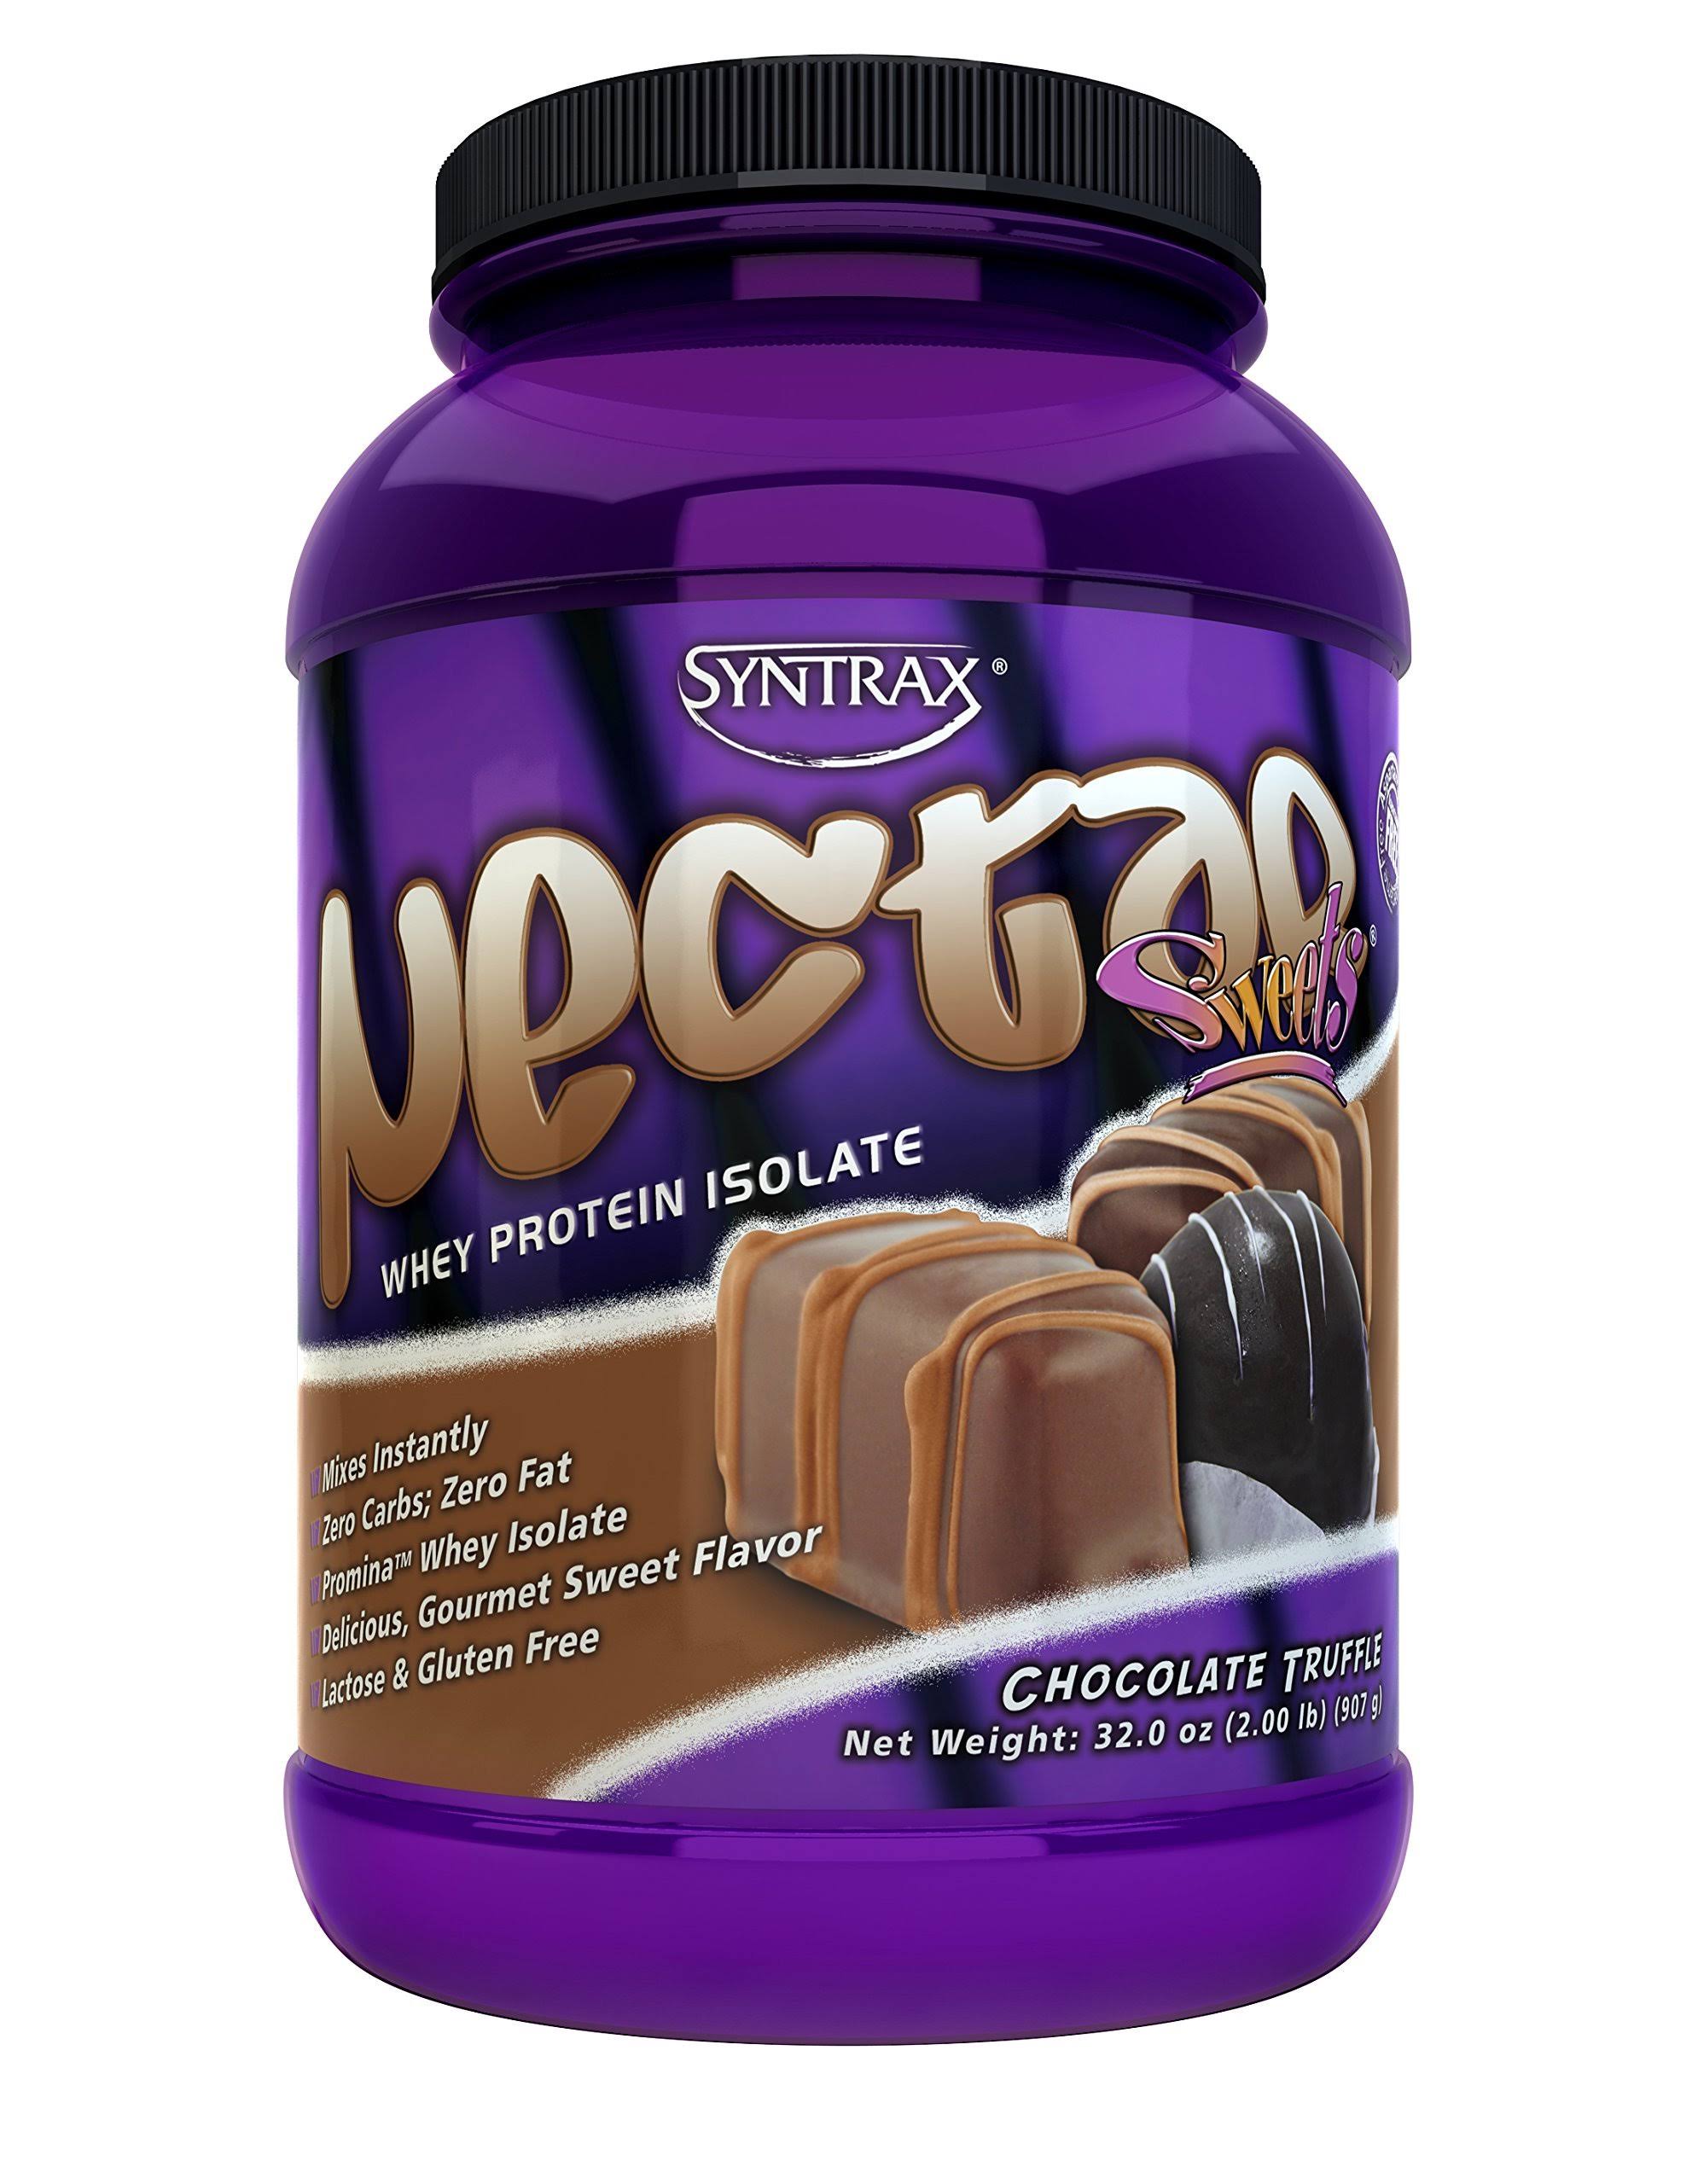 Syntrax Nectar Sweets 2 lbs - Chocolate Truffle